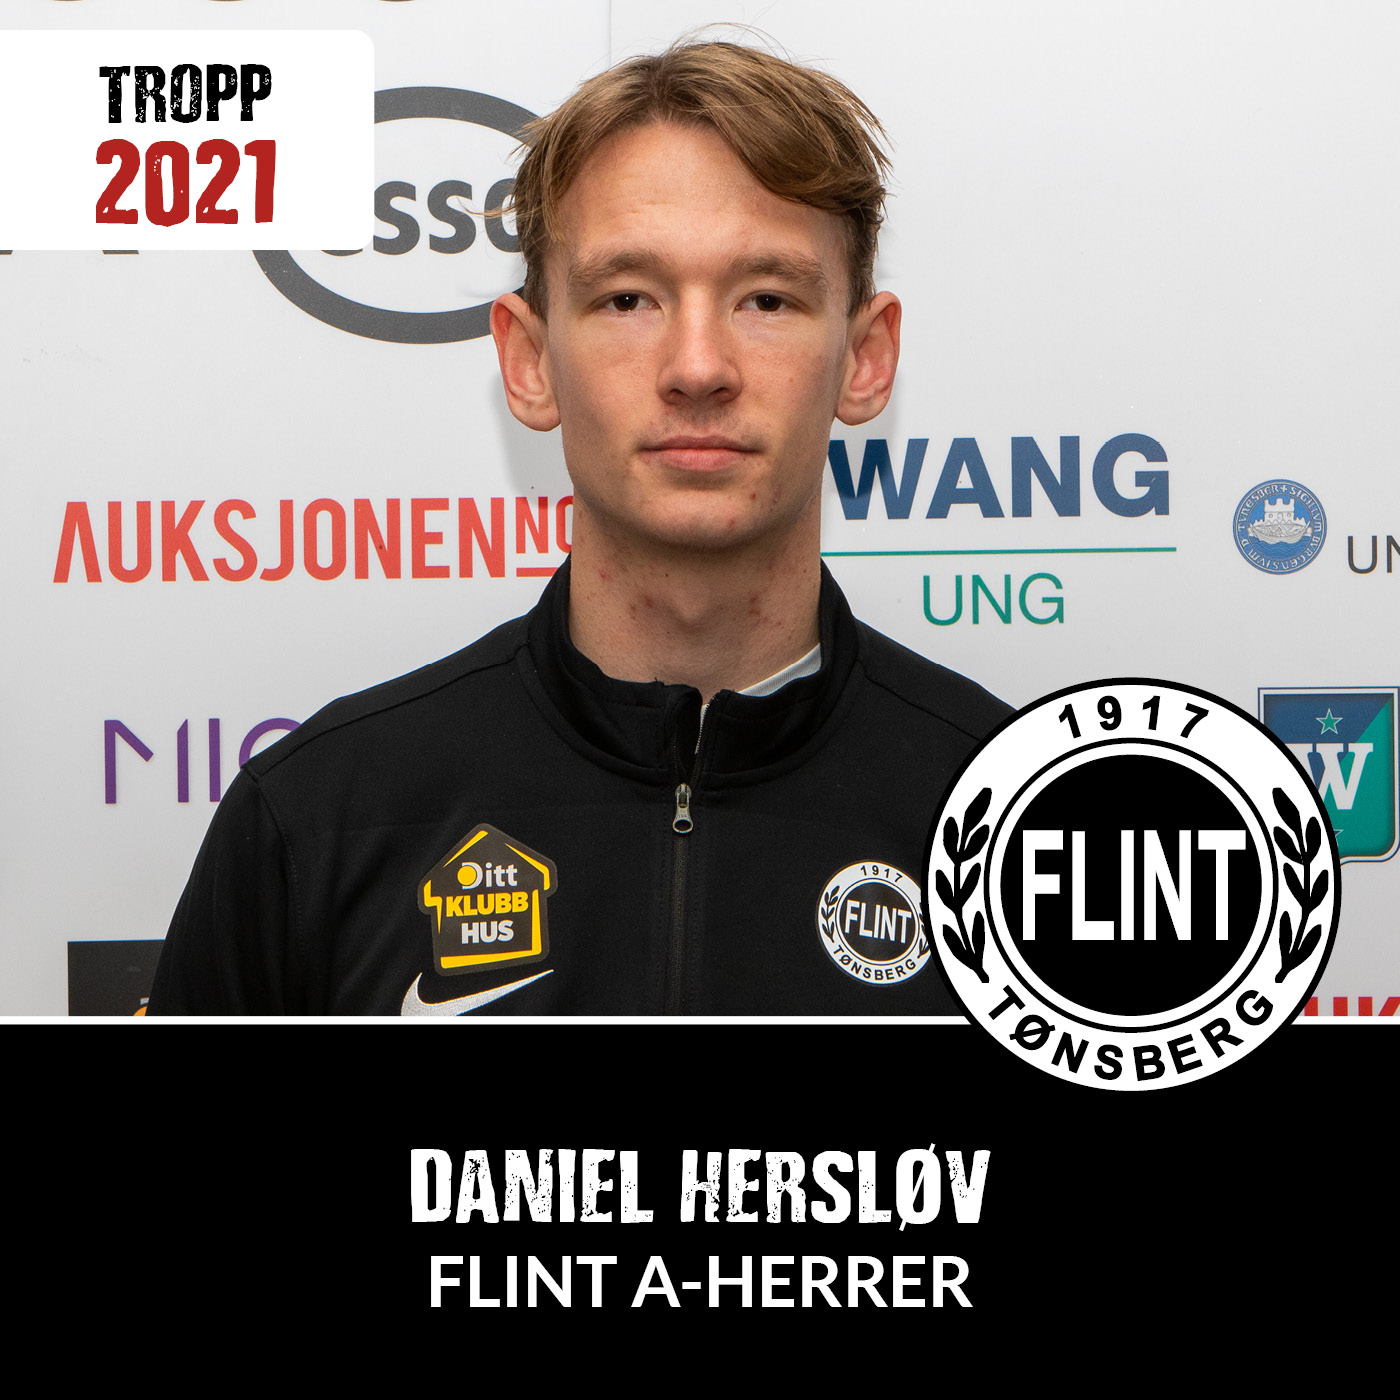 https://www.flintfotball.no/wp-content/uploads/2020/12/A-herrer-2021-Daniel-Herslov.jpg